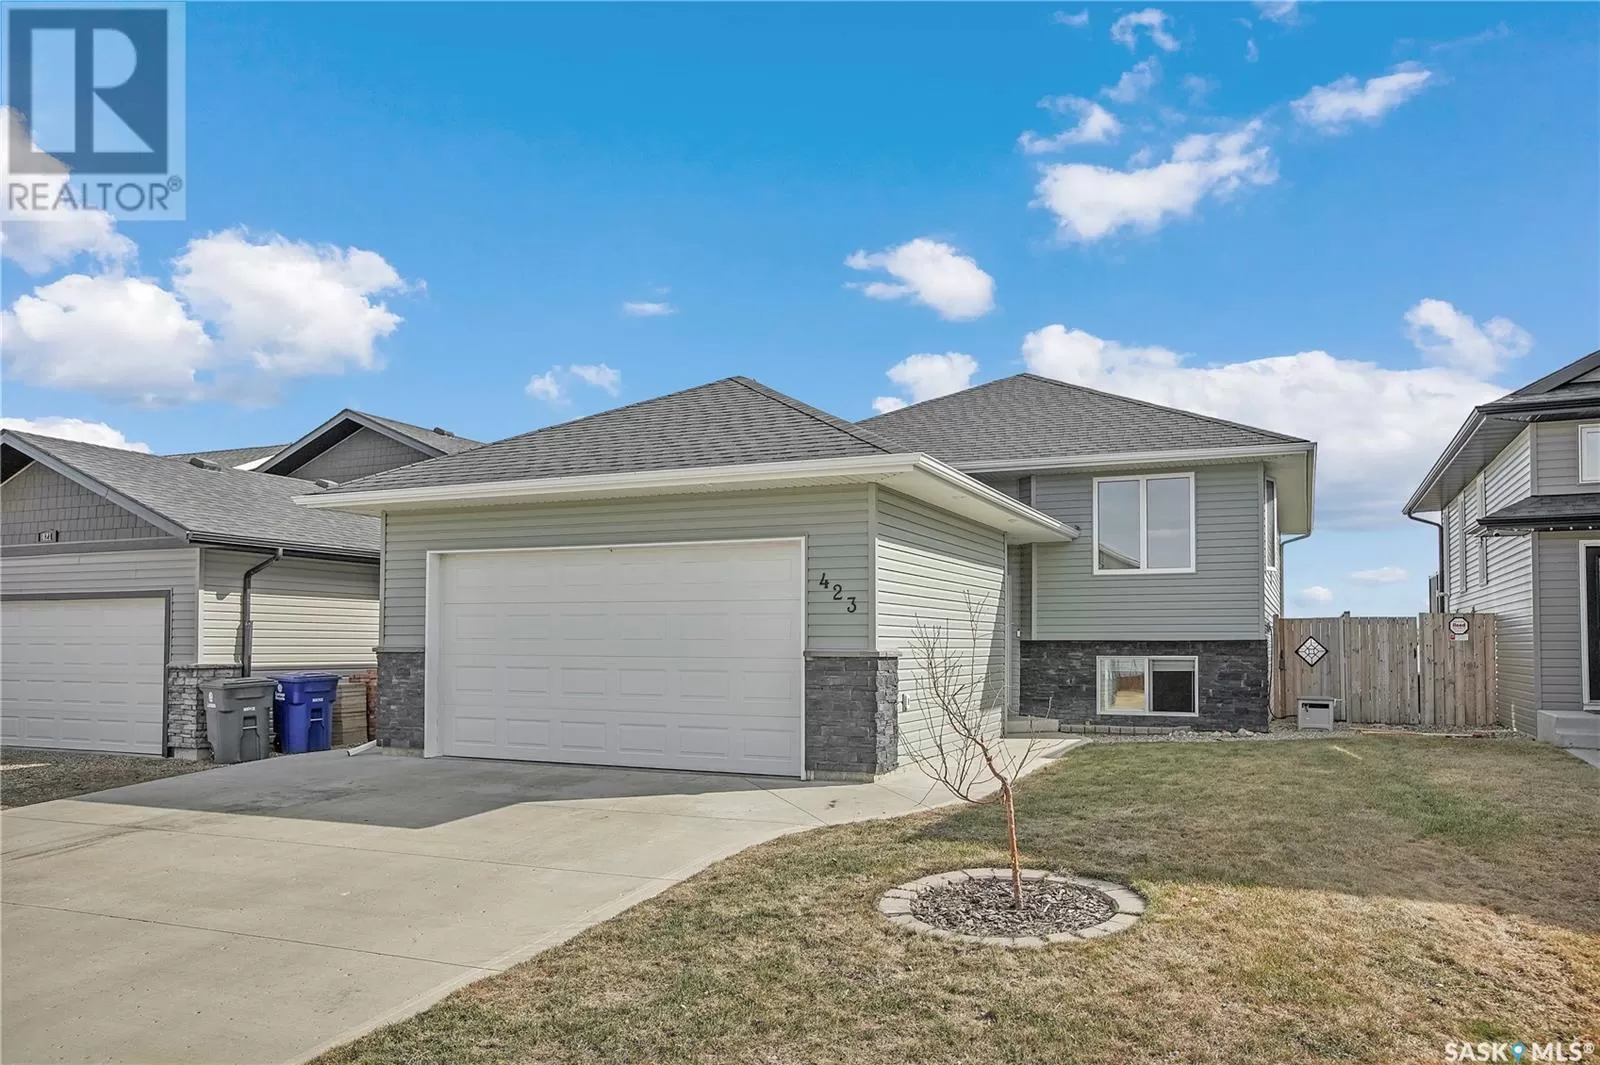 House for rent: 423 Martens Street, Warman, Saskatchewan S0K 4S3